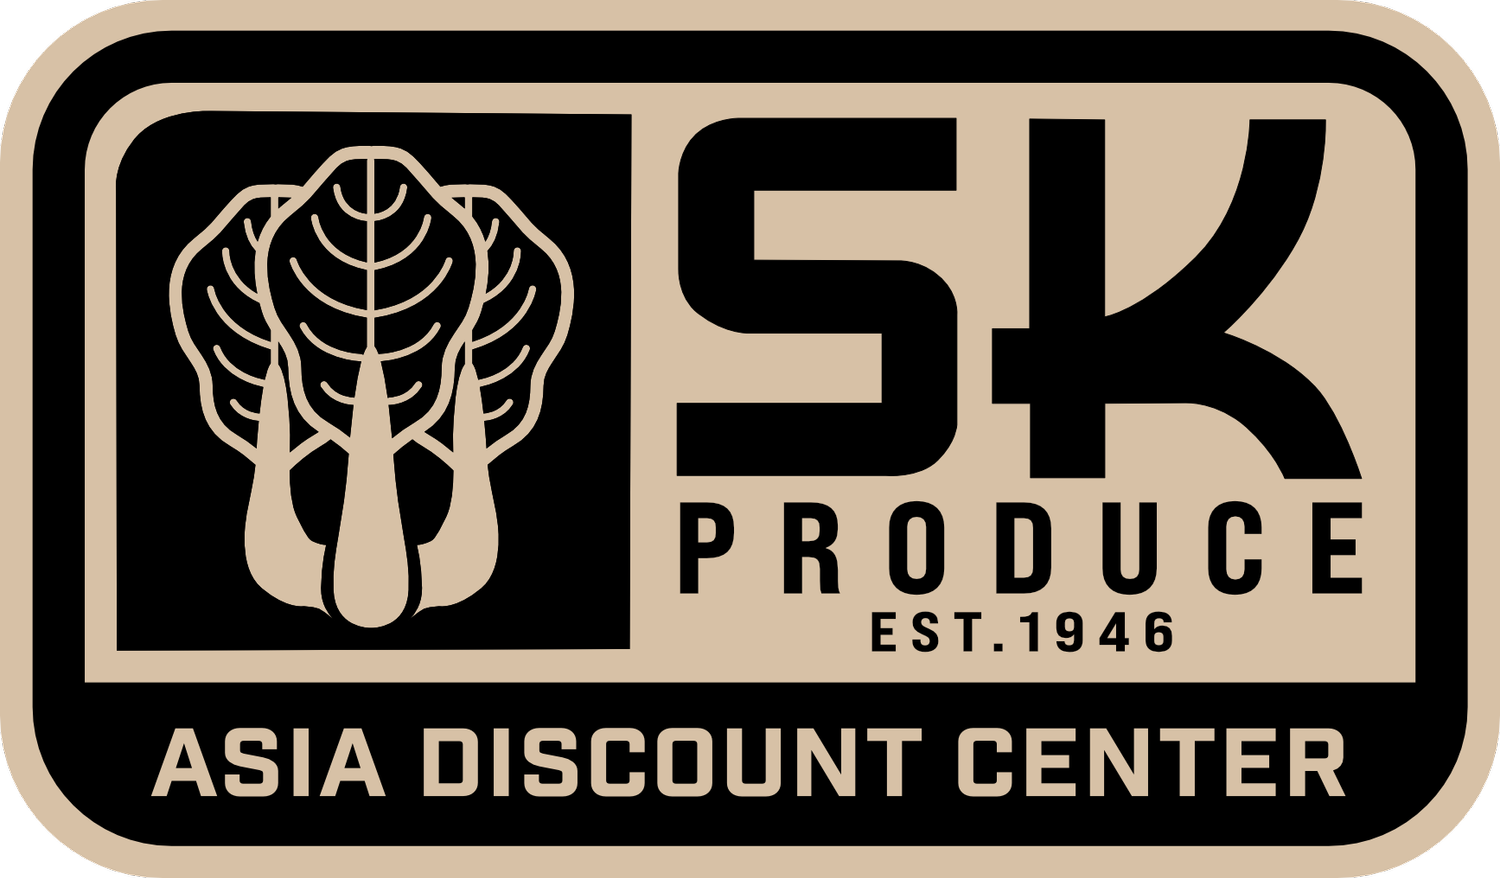 SK Produce